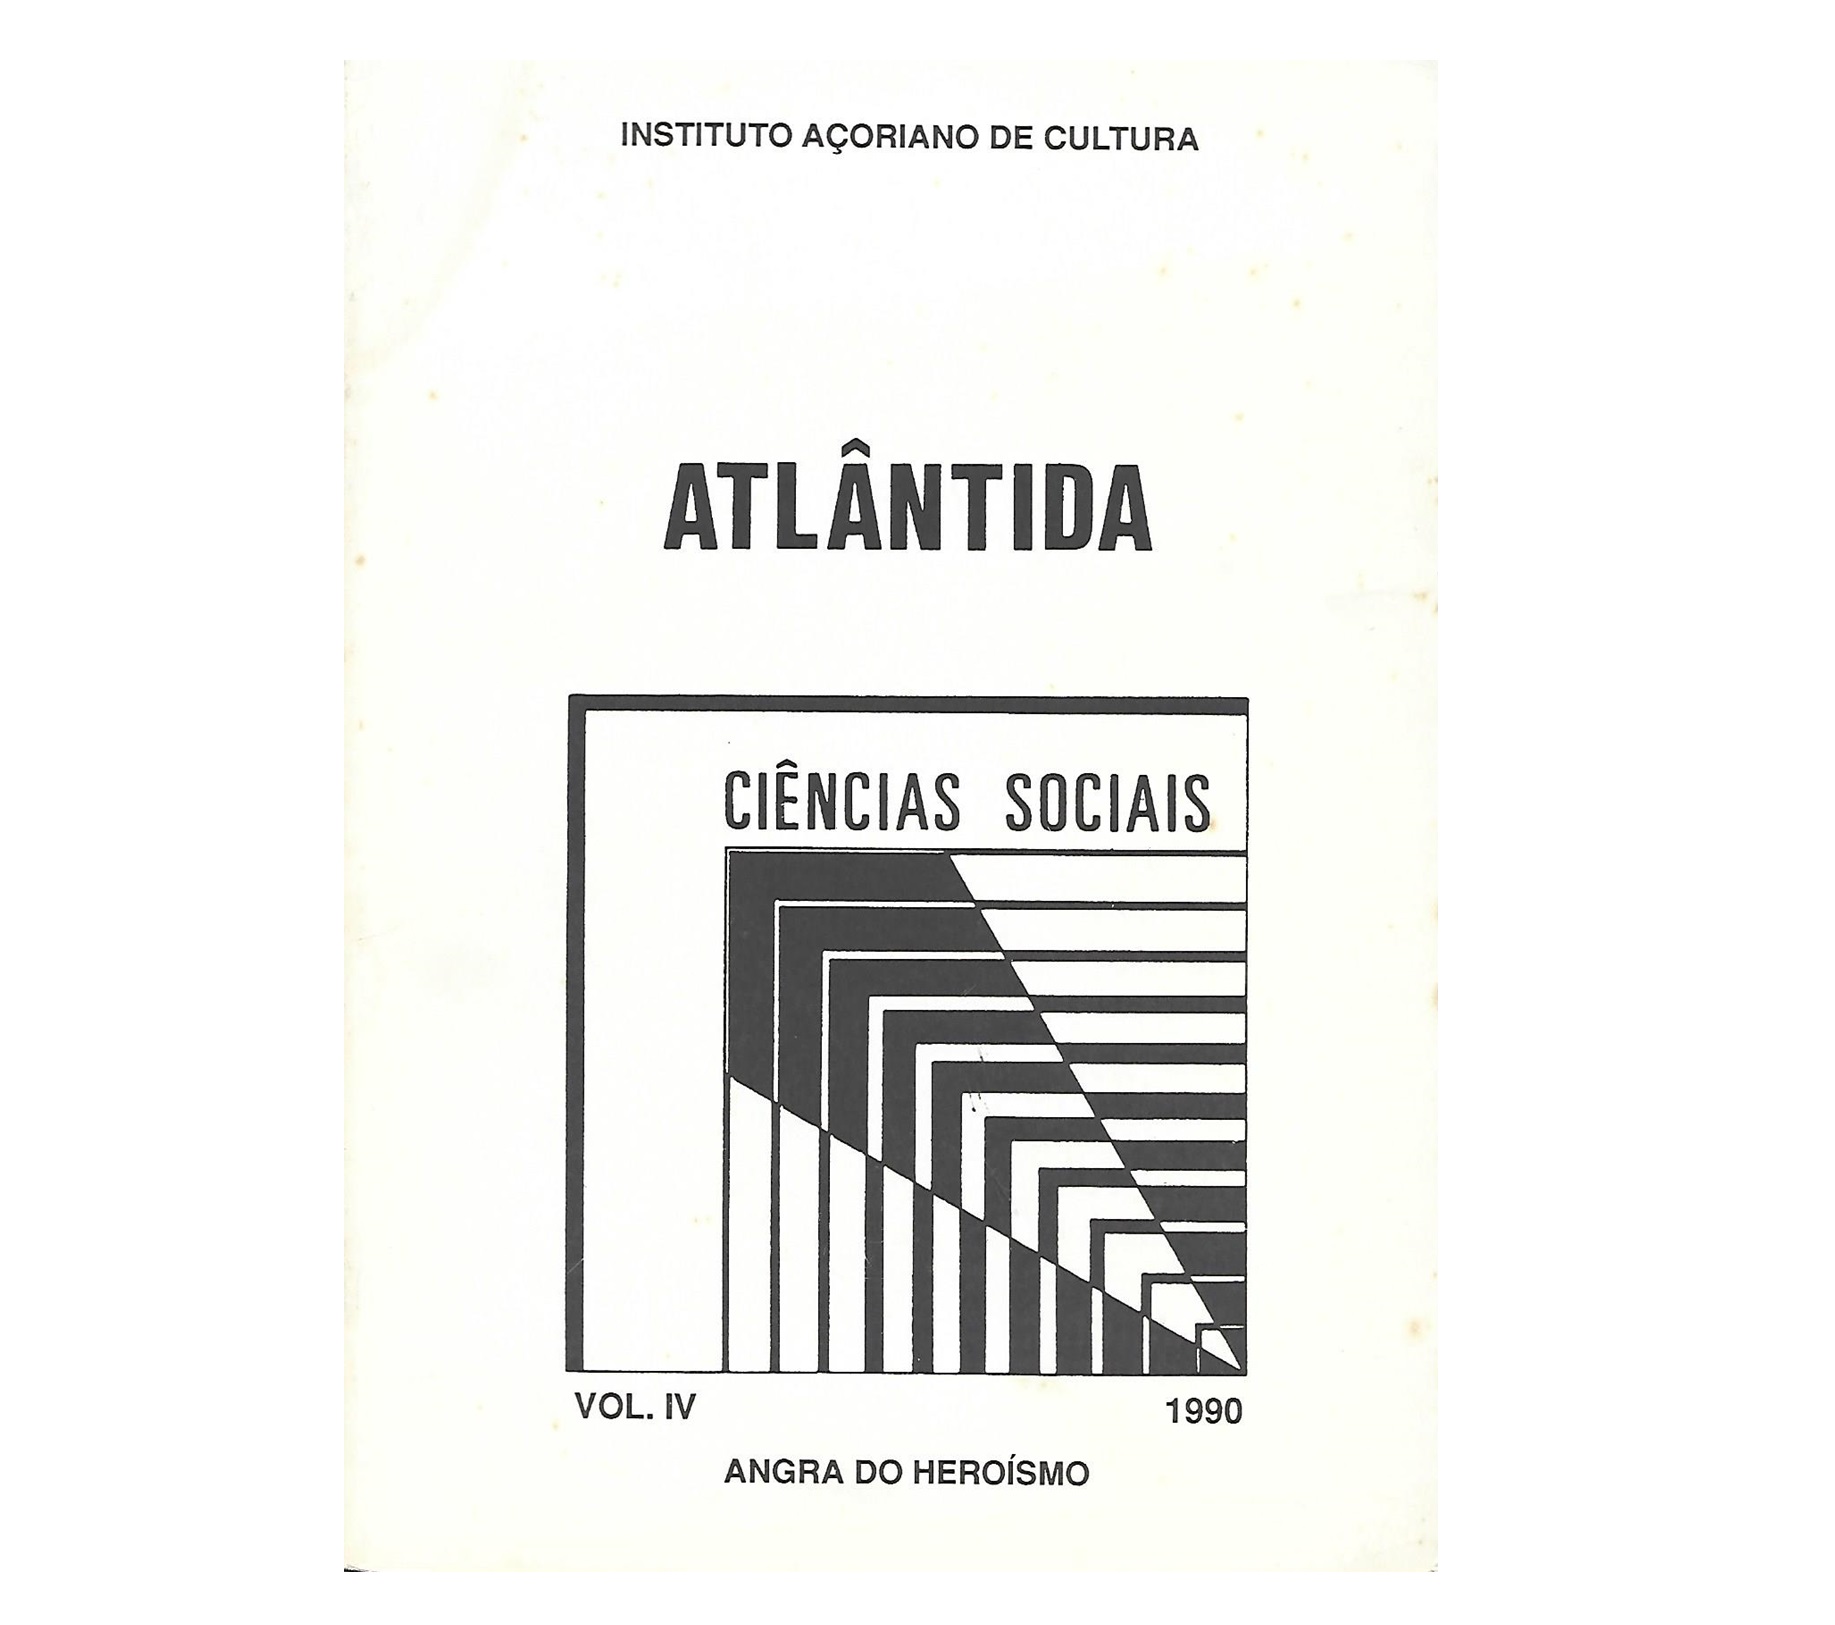 ATLÂNTIDA: CIÊNCIAS SOCIAIS. VOL. IV, 1990